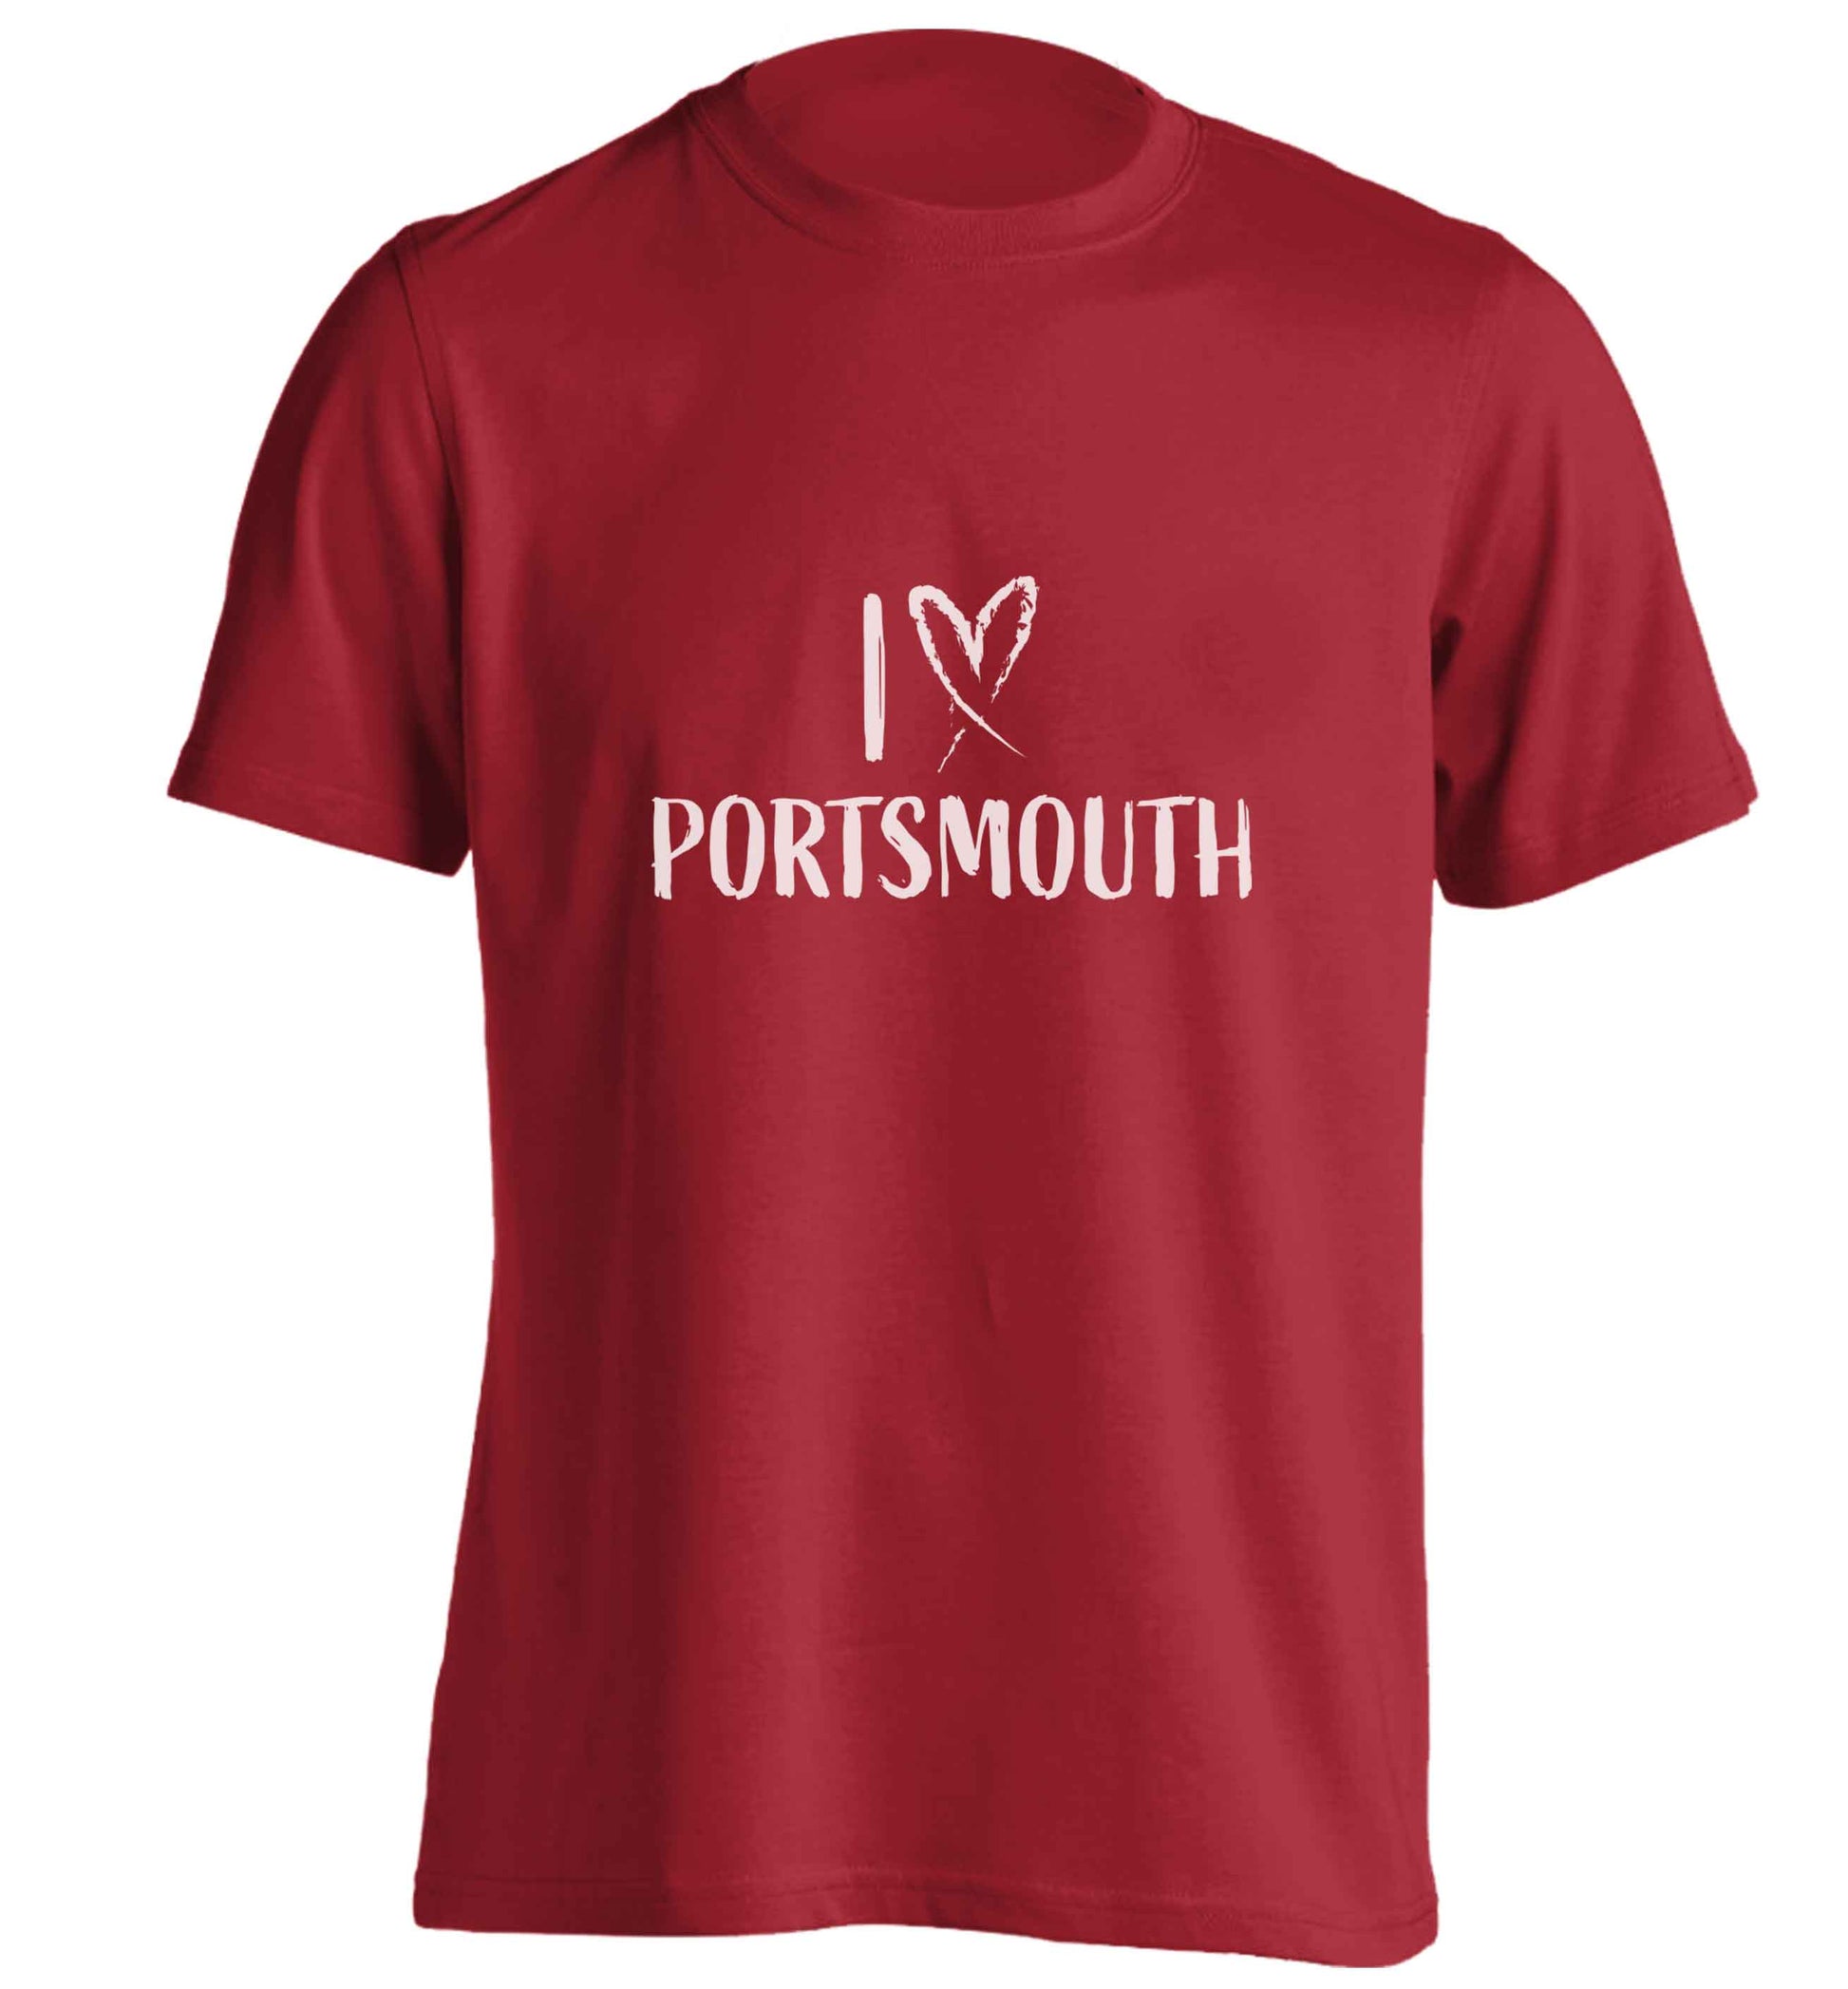 I love Portsmouth adults unisex red Tshirt 2XL